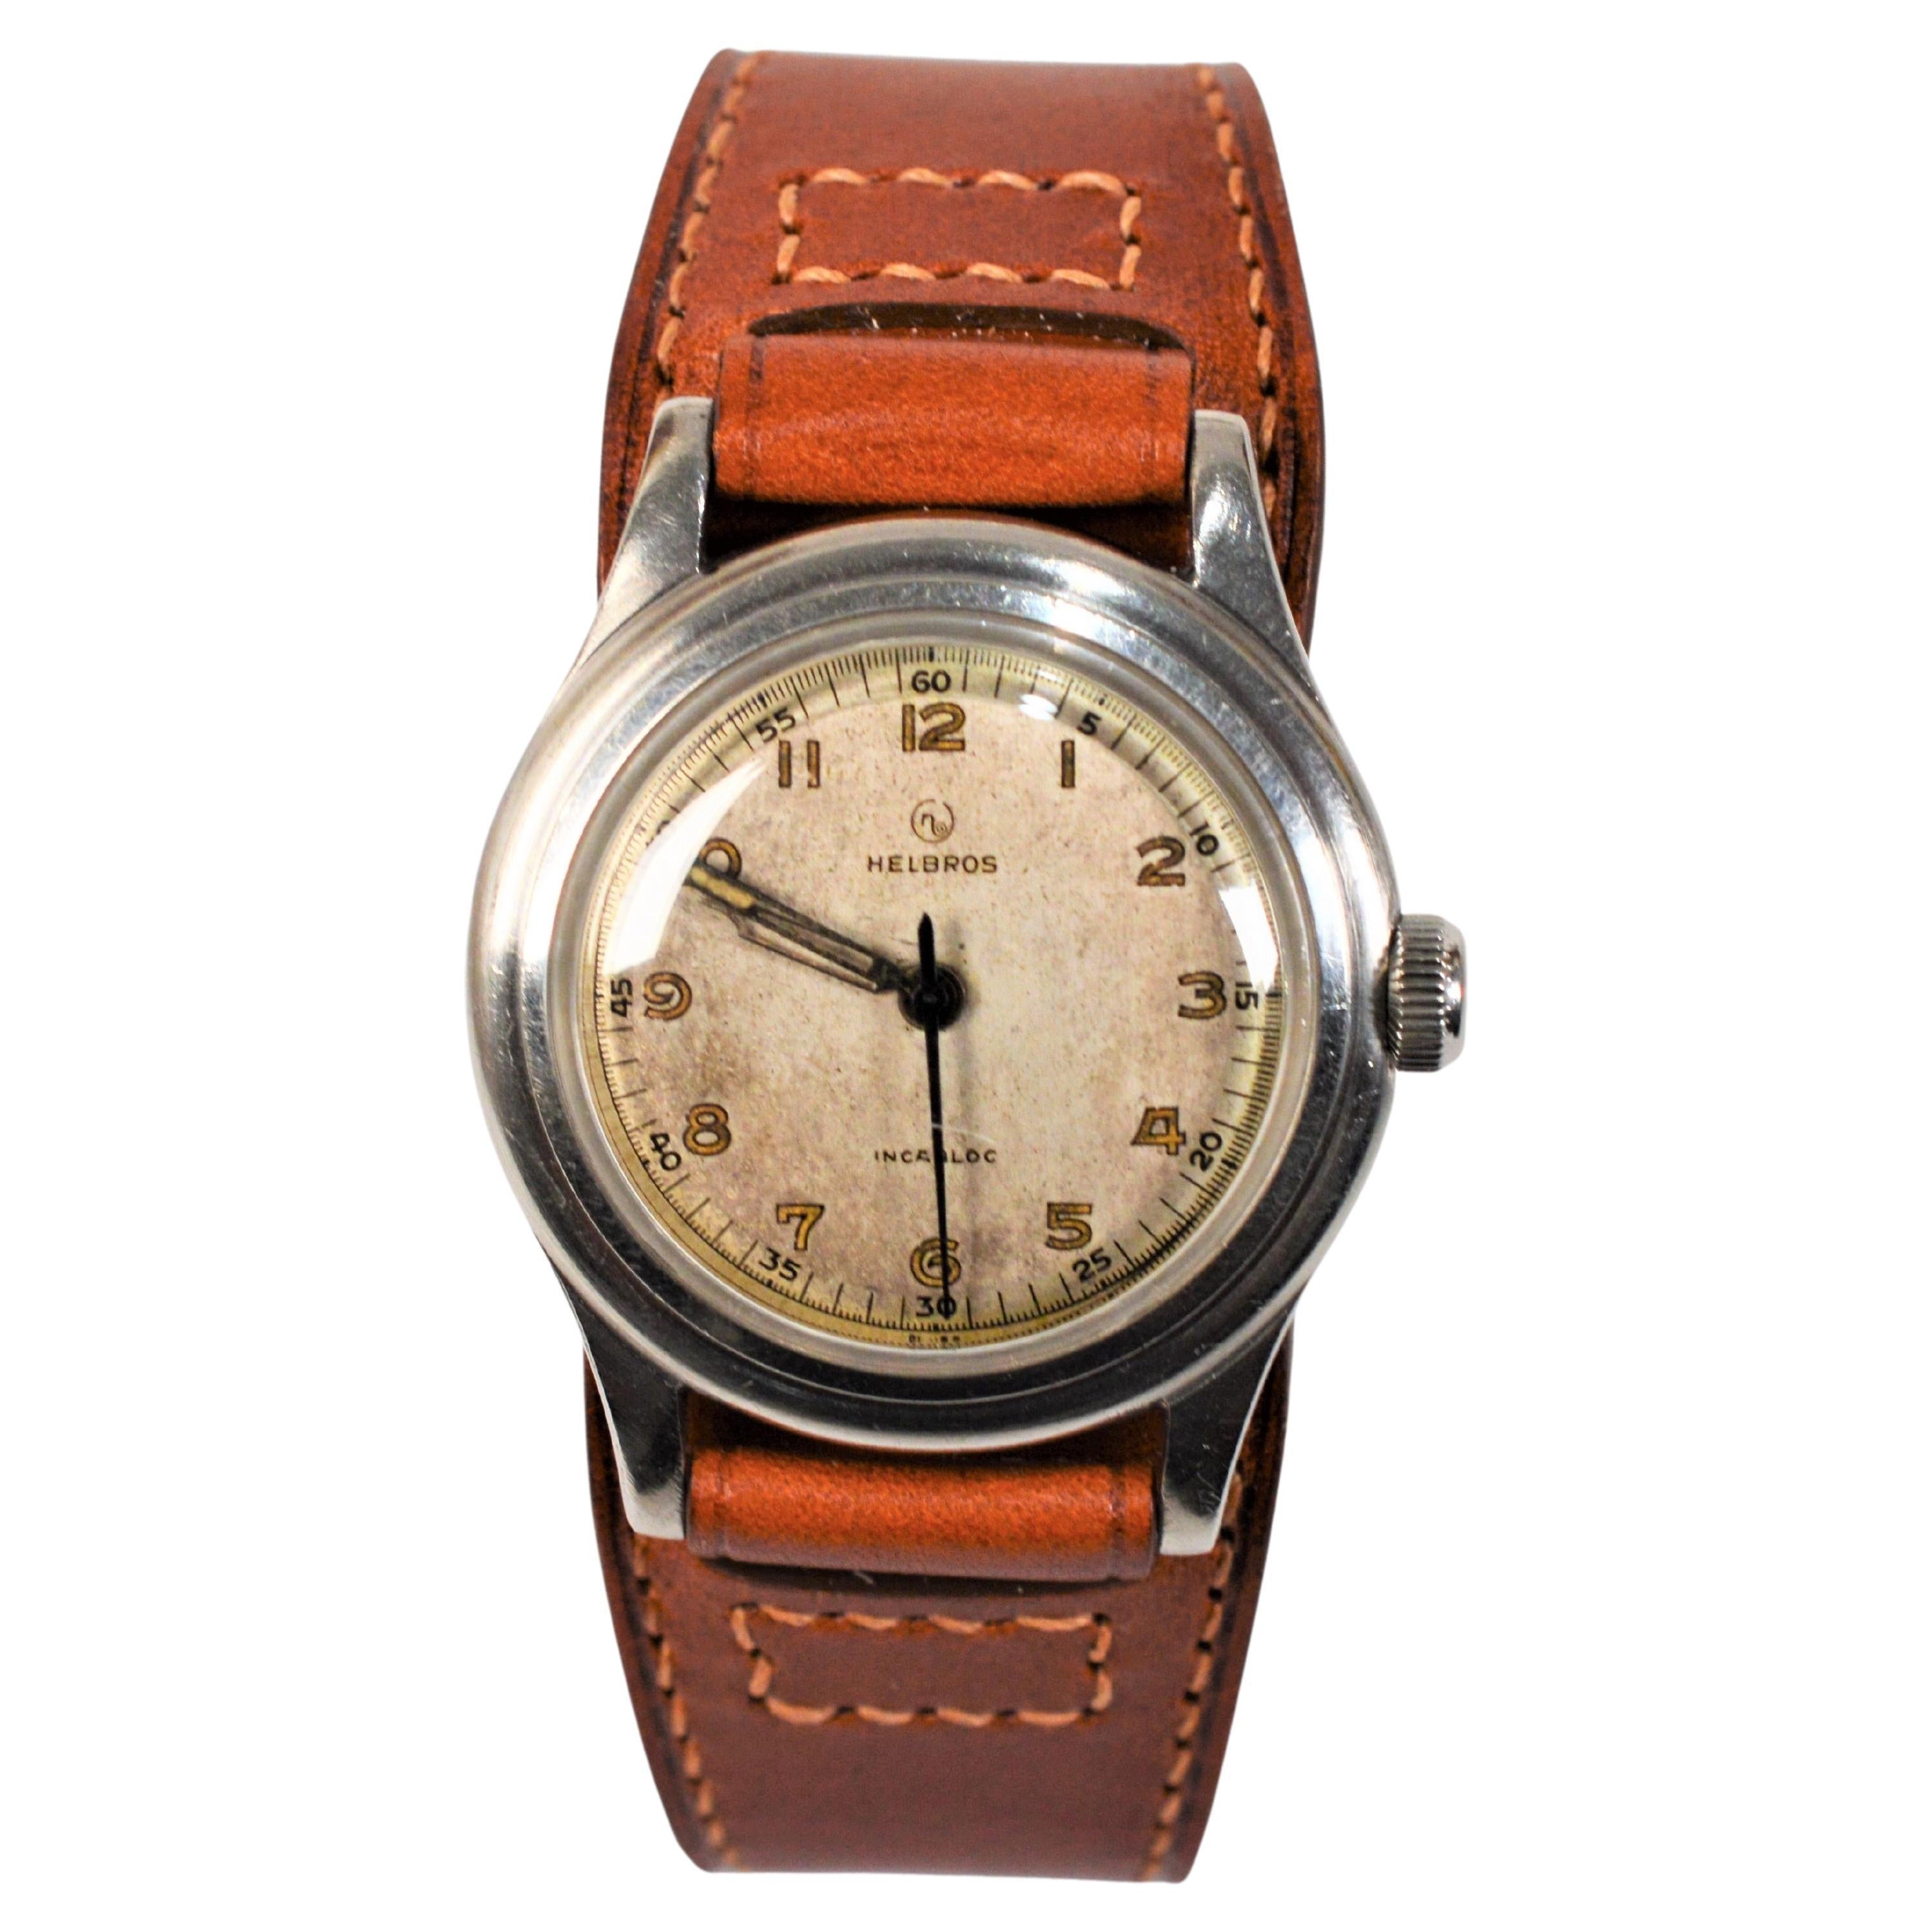 Vintage Helbros Military Style Men's Wrist Watch 